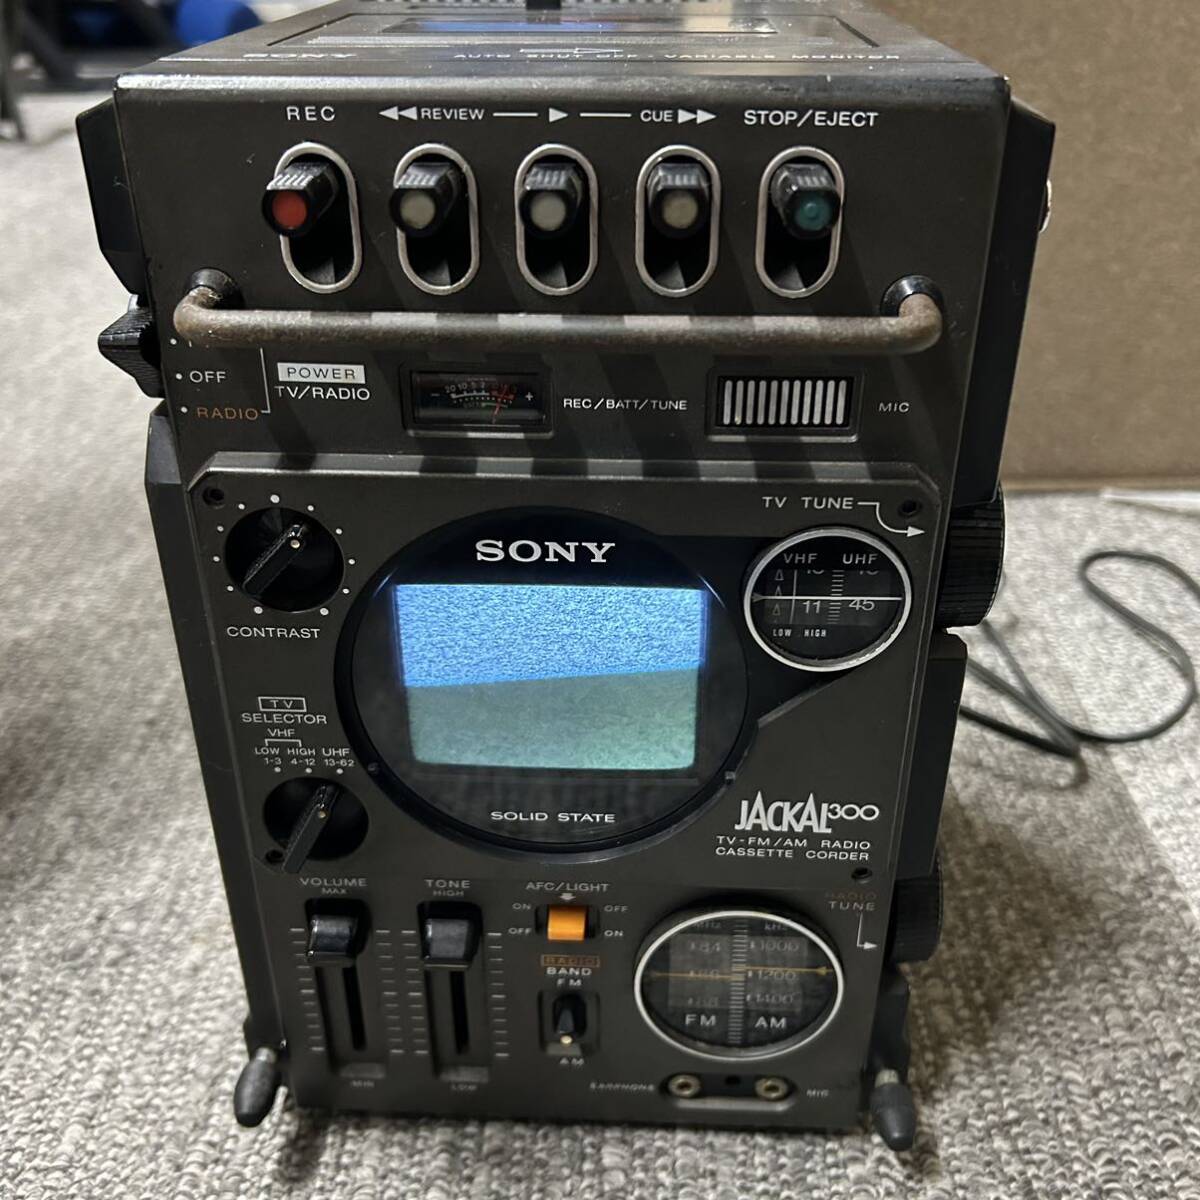 SONY ソニー FX-300 JACKAL300（初代ジャッカル）白黒テレビ付ラジカセ TV-FM/AM RECEIVER CASSET CORDER ジャンク品 長期保管品